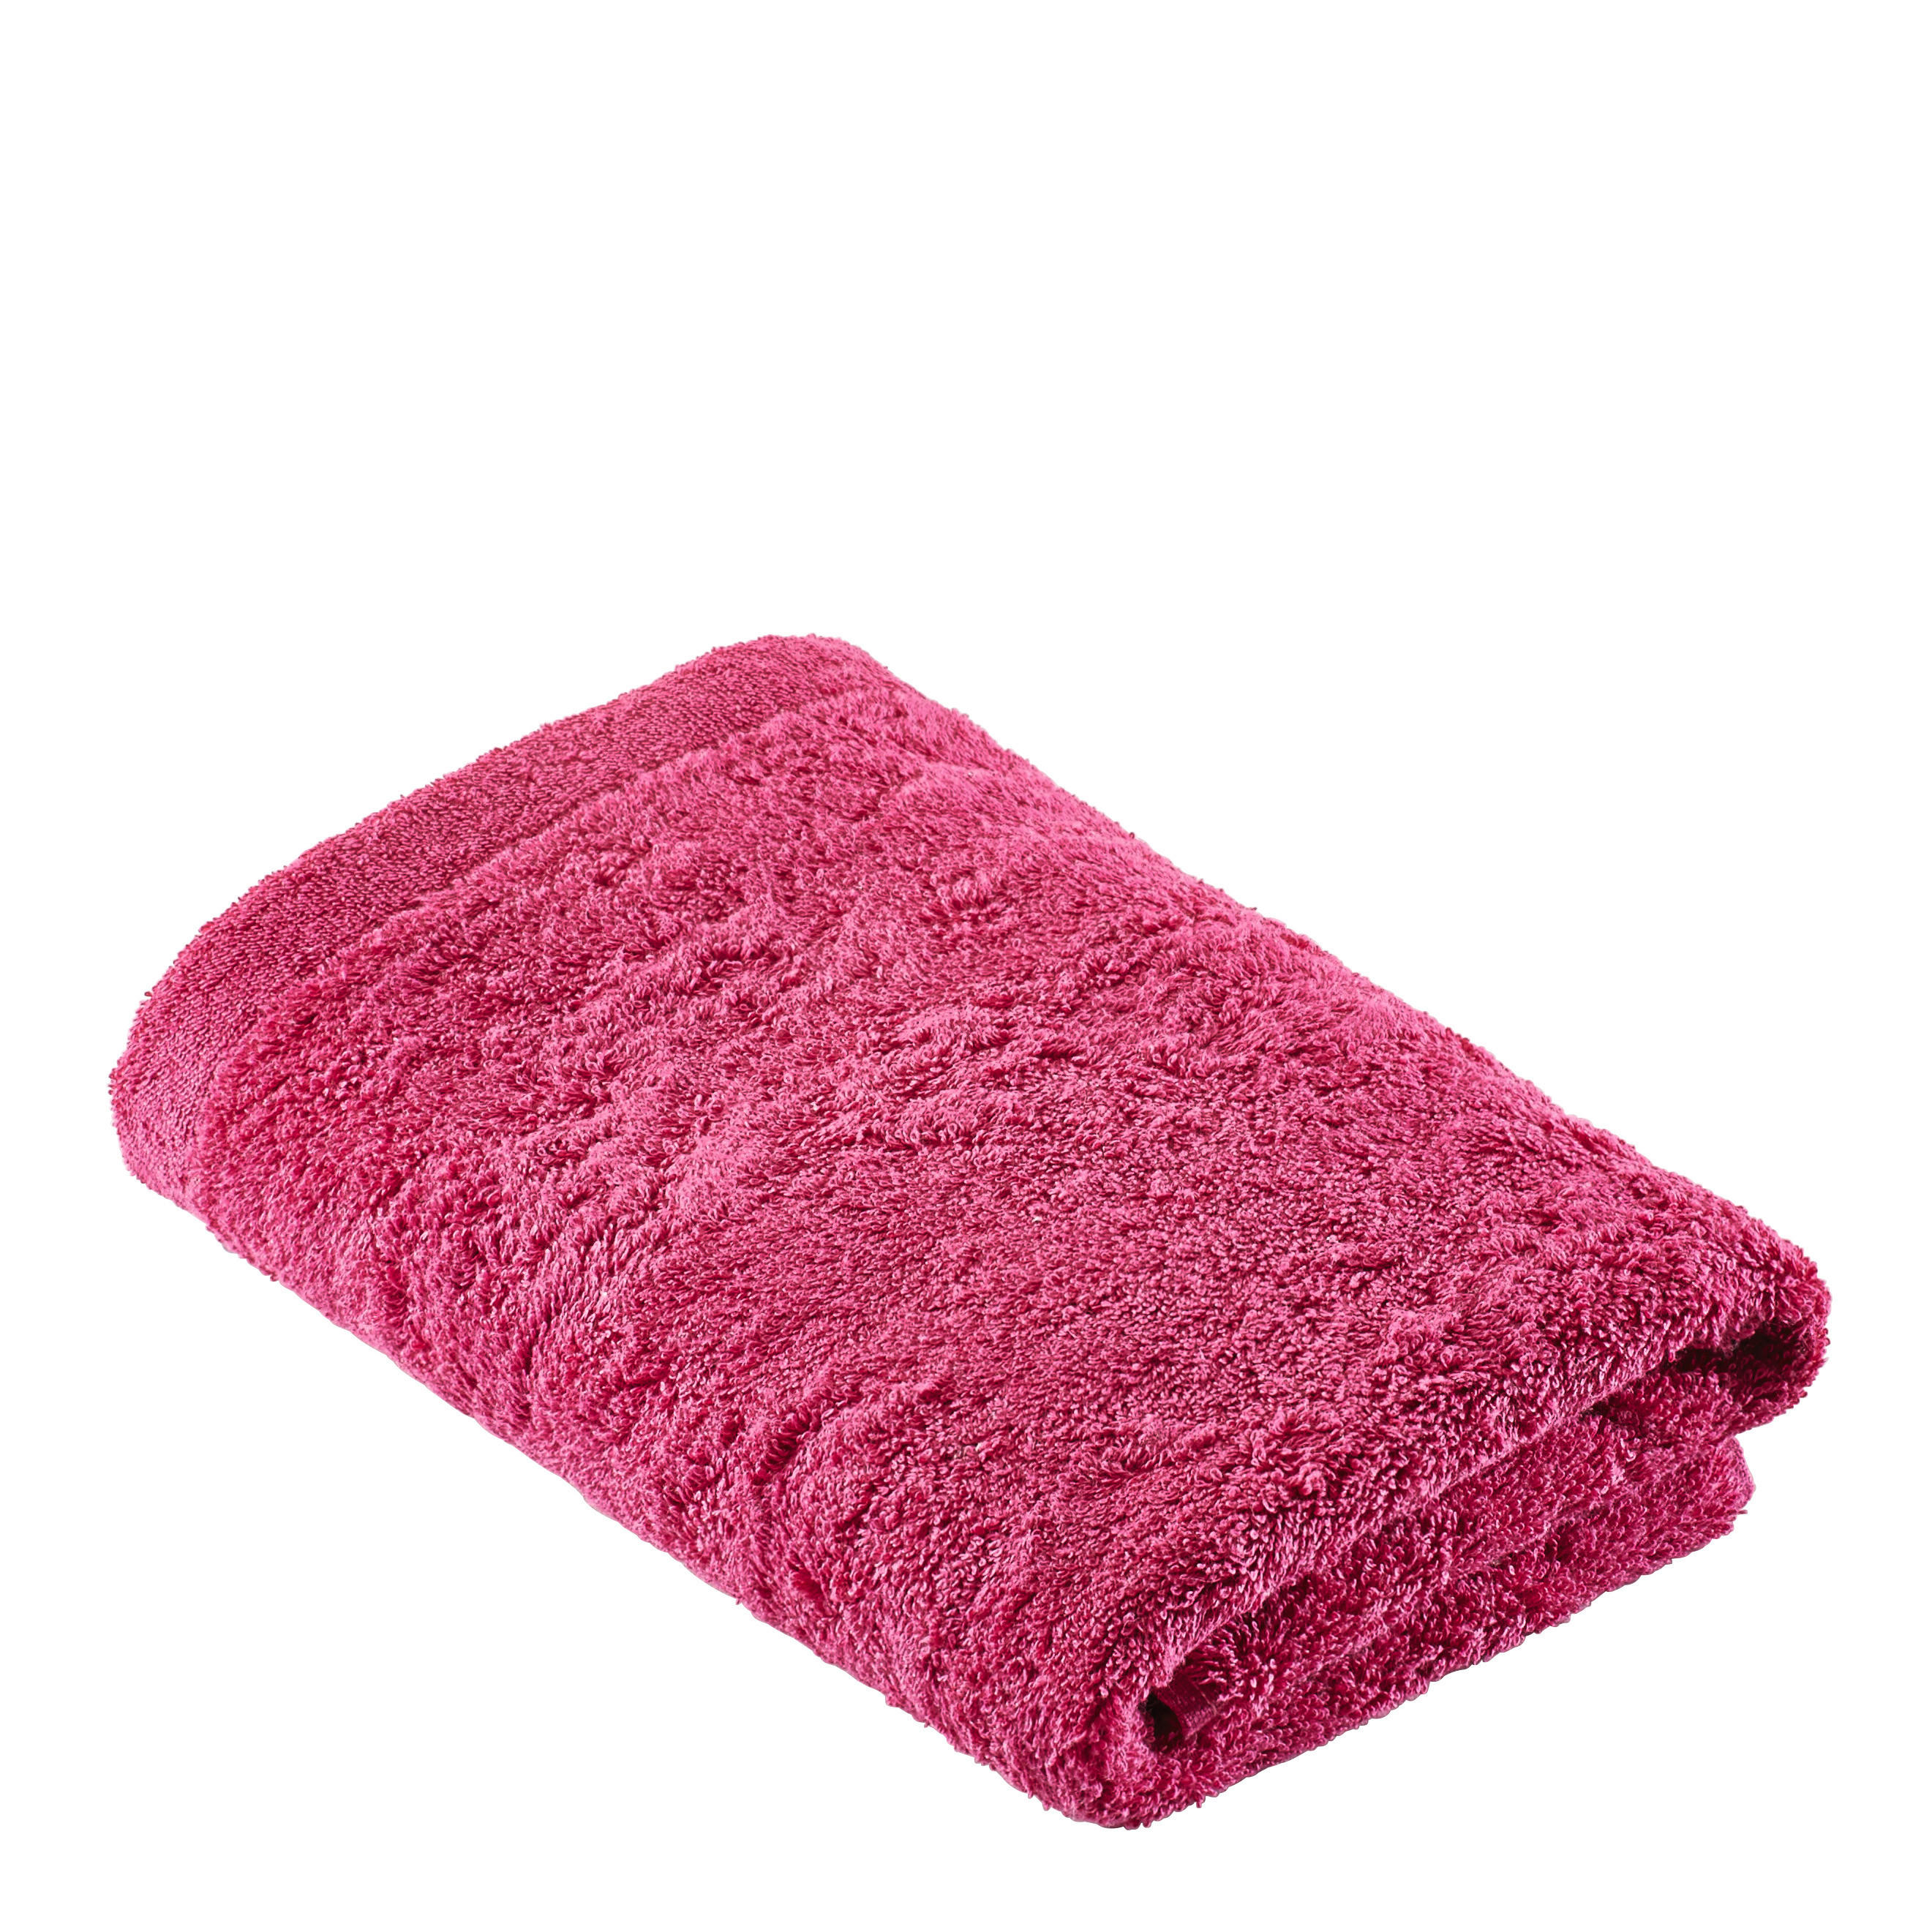 HANDTUCH Lifestyle Uni  - Pink, Basics, Textil (50/100cm) - Cawoe